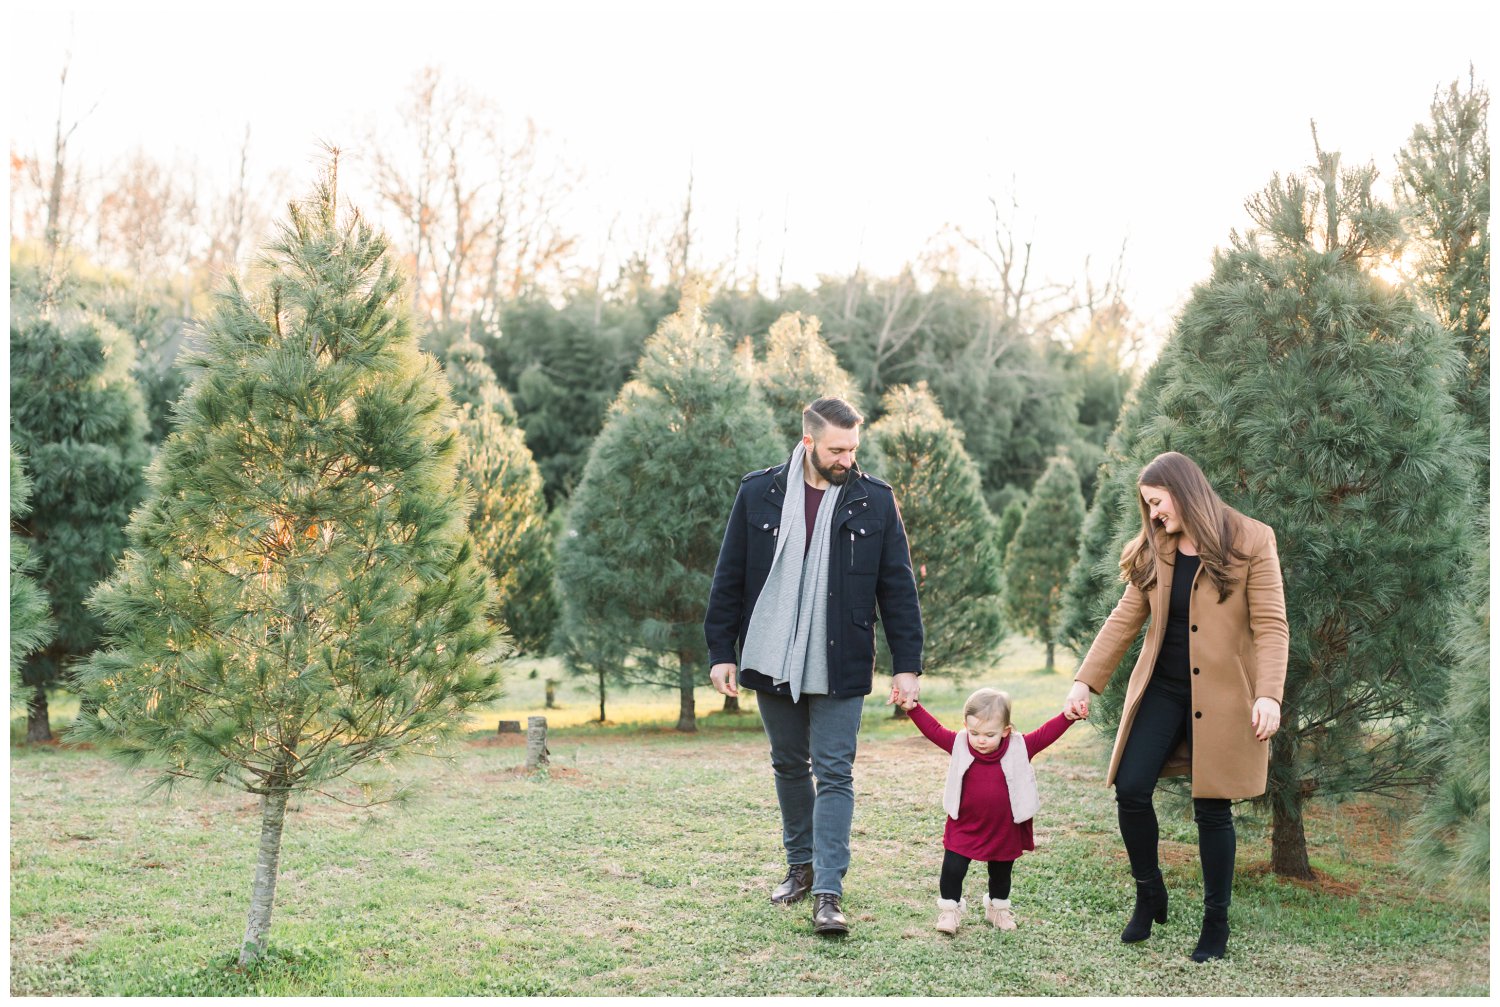 Grace Tree Farm Christmas family session in North Carolina